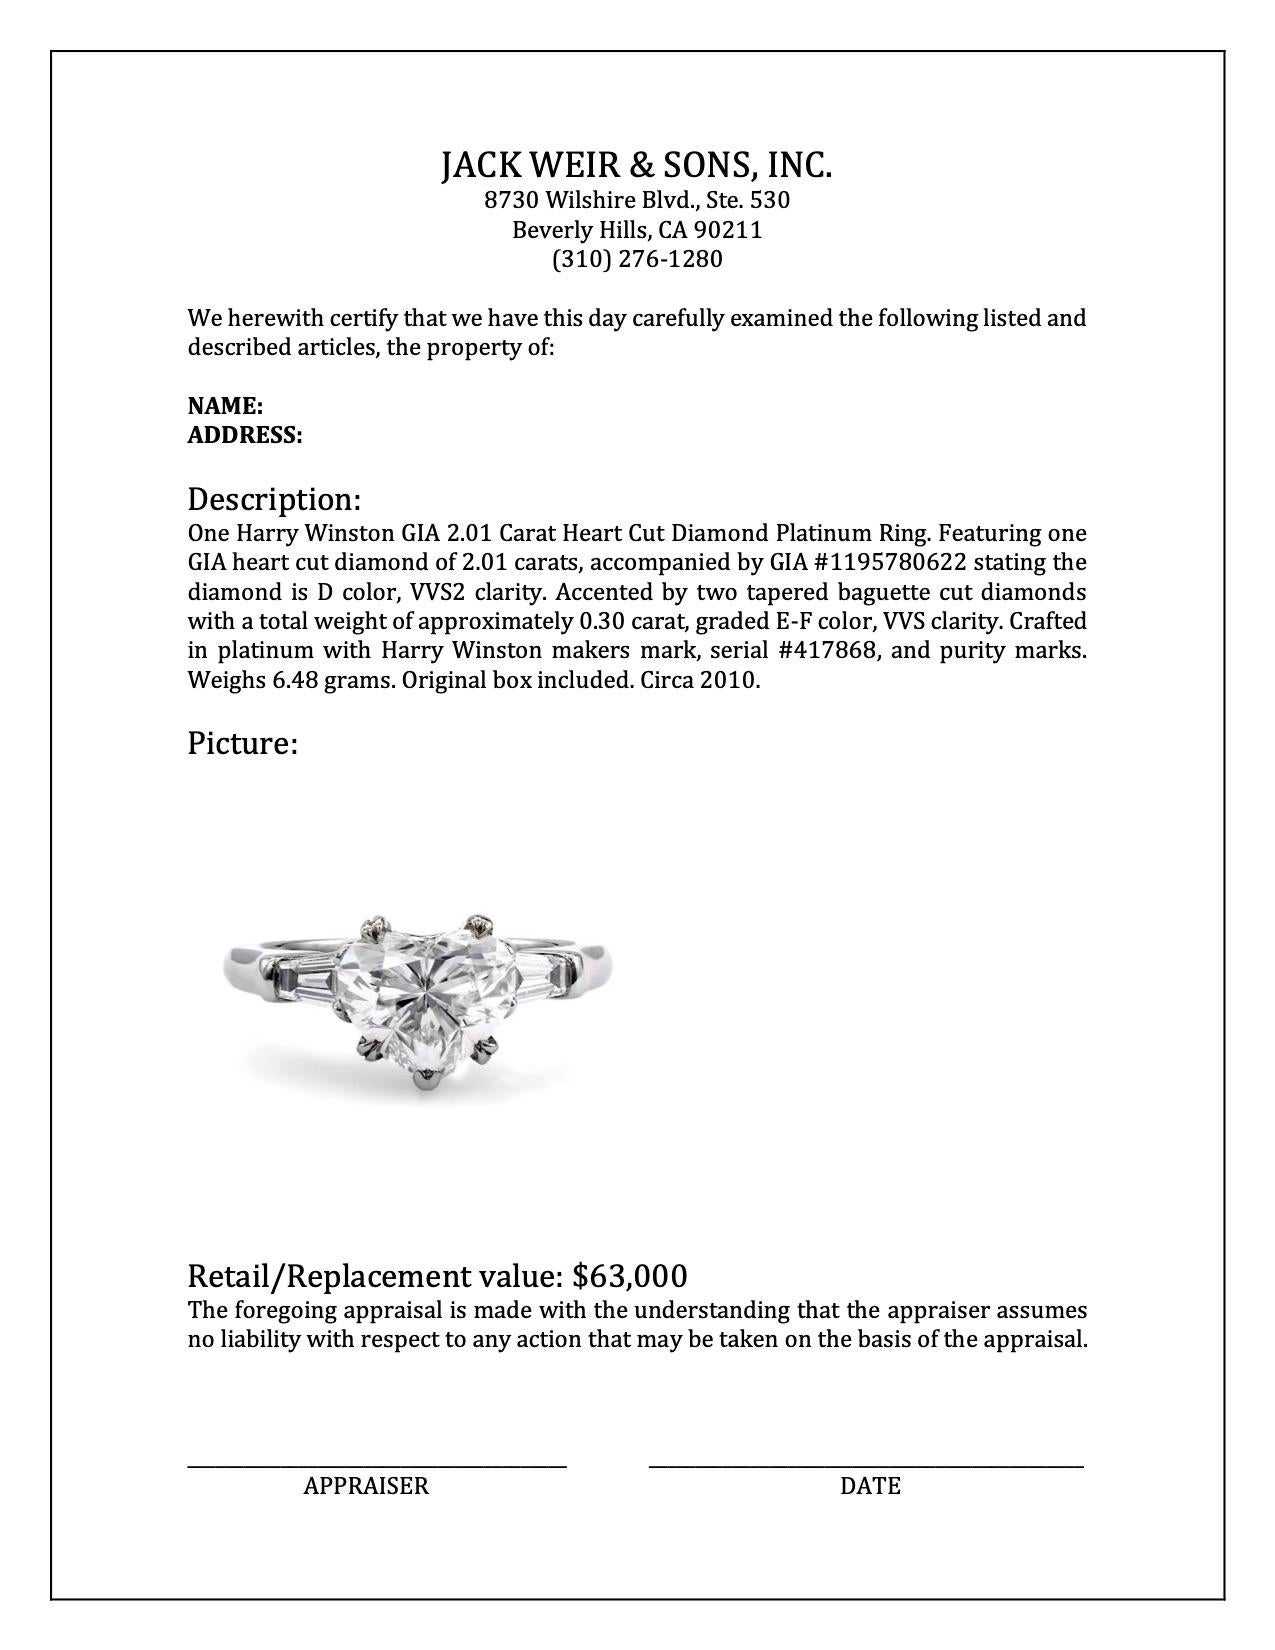 Harry Winston GIA 2.01 Carat Heart Cut Diamond Platinum Ring For Sale 4